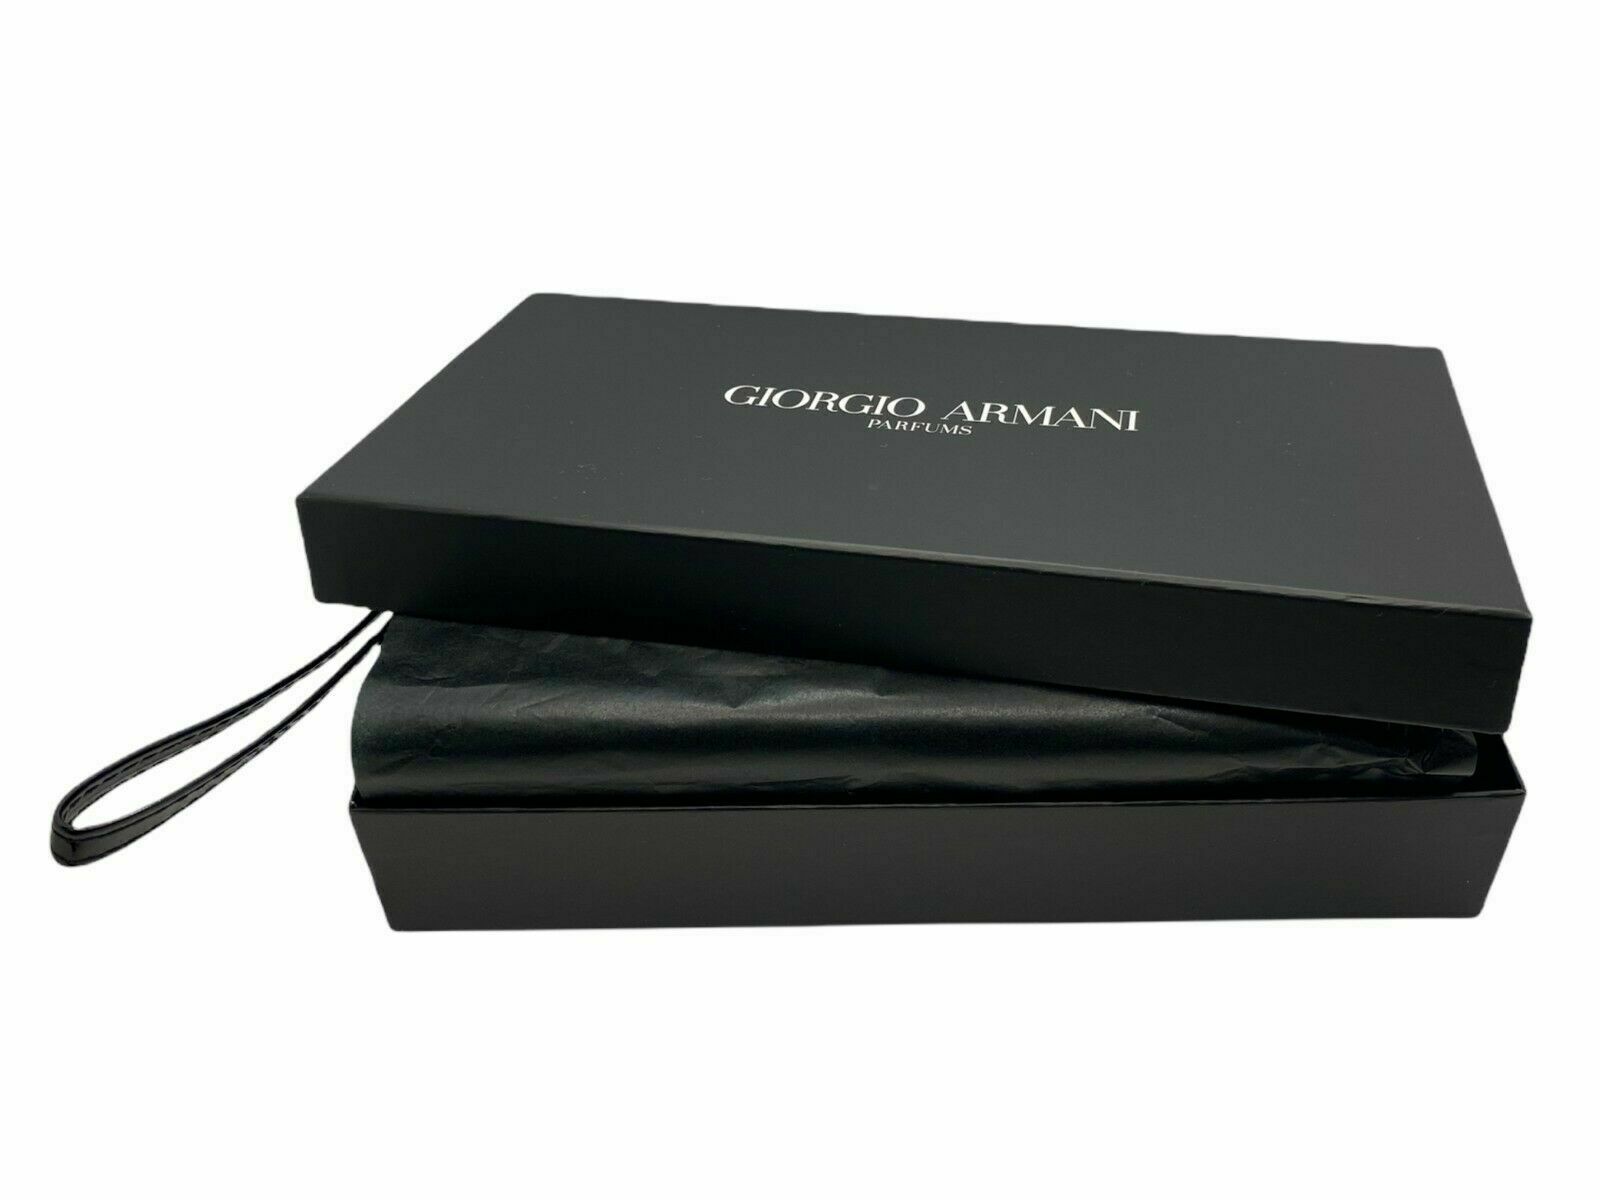 Giorgio Armani Si Parfum 7ml+Maestro LipColor+Black Bag Giftset